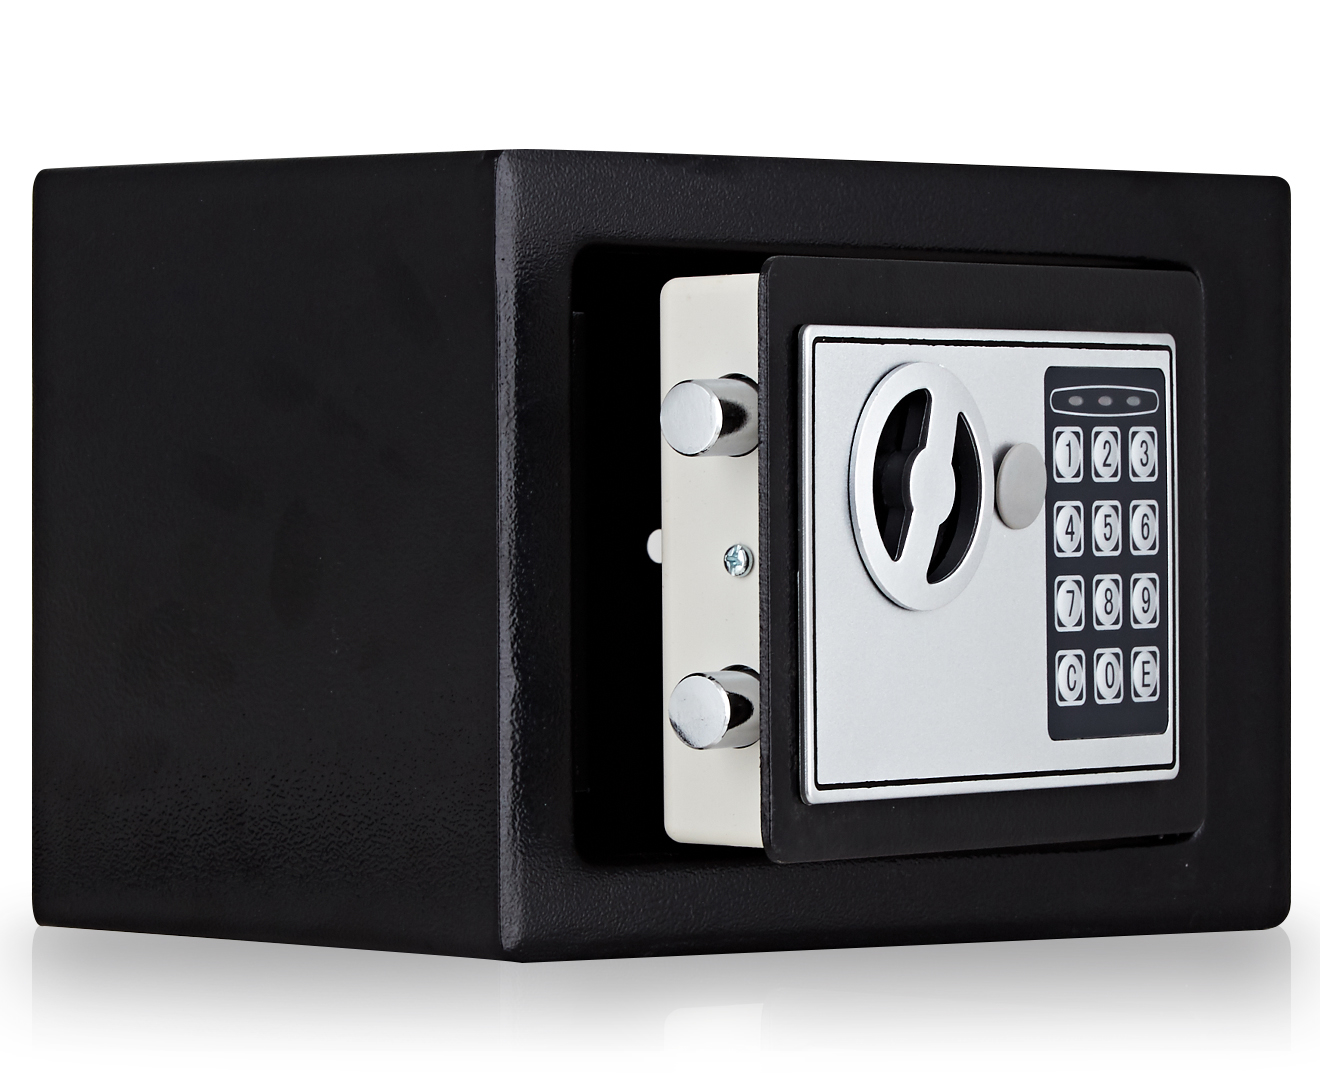 digital sentry safe comes with a default code